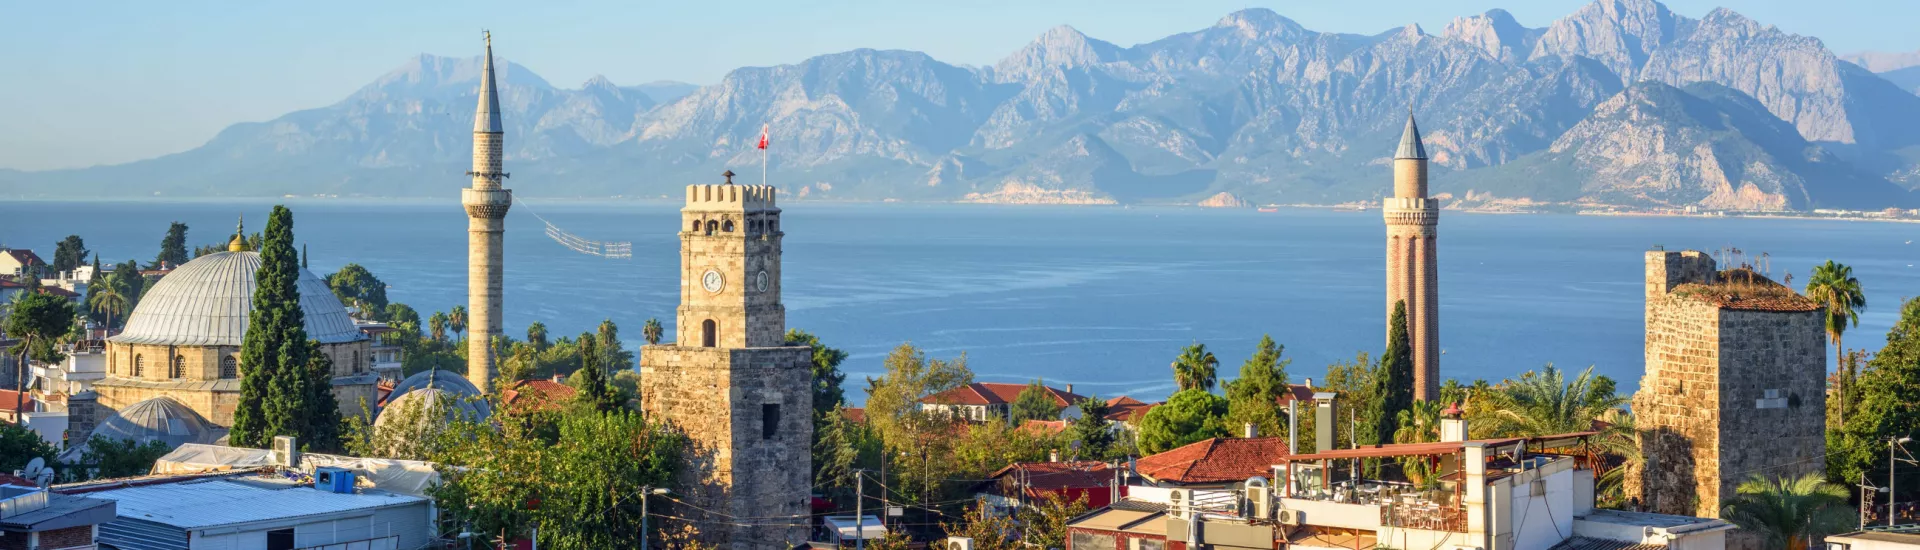 View of the city of Antalya, Turkey